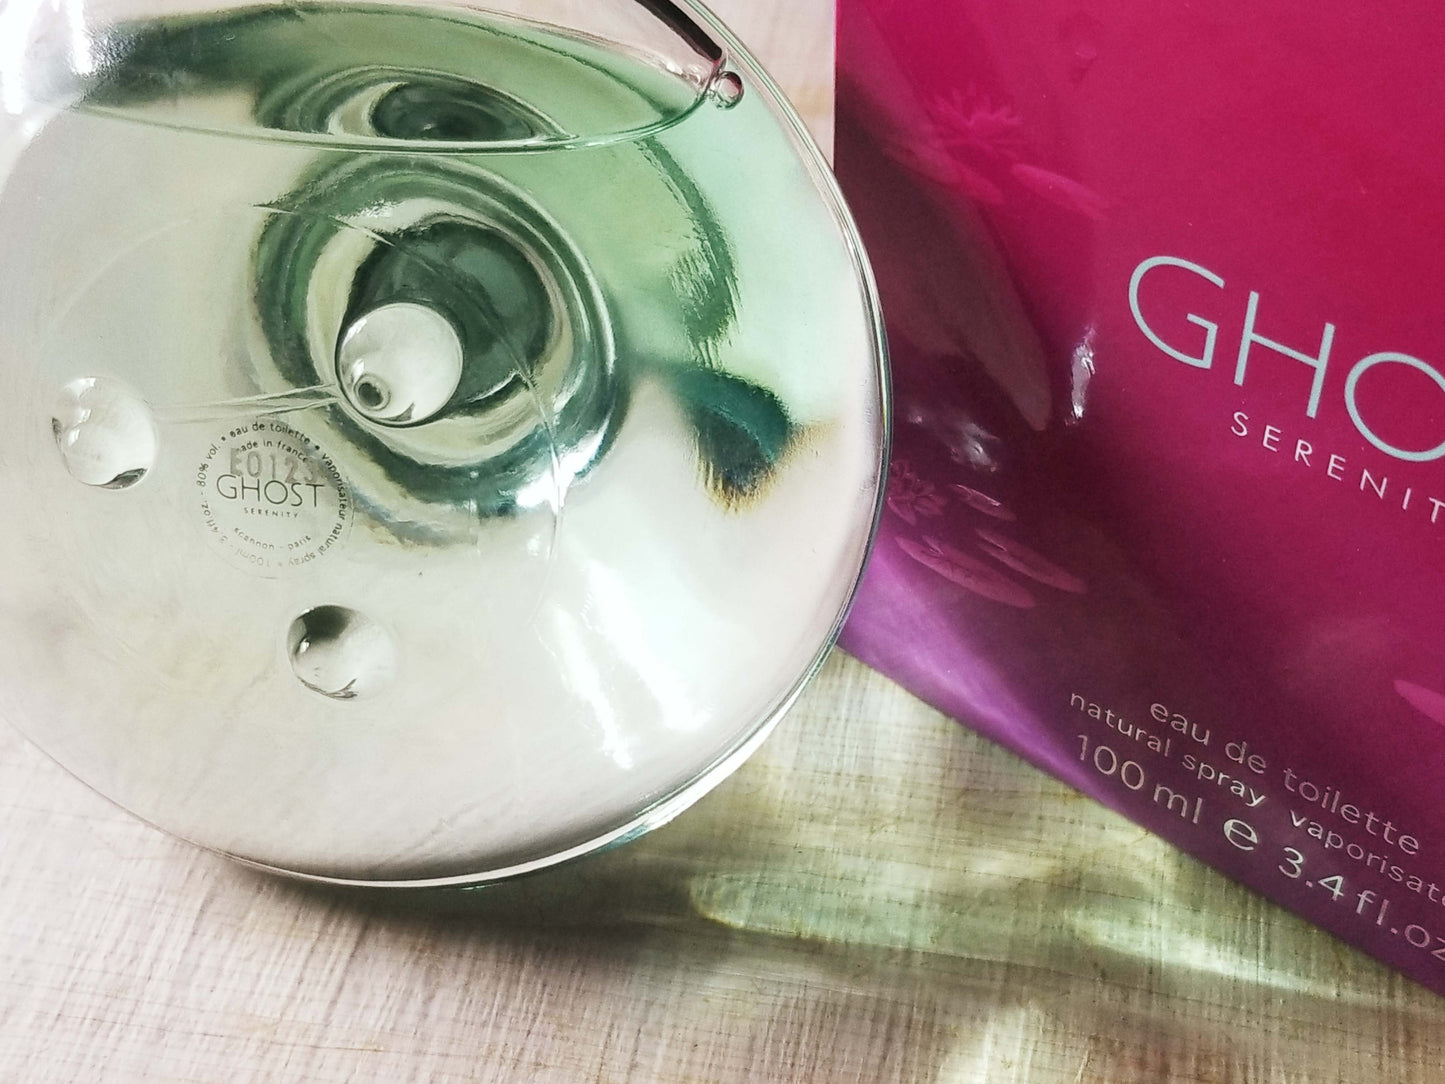 Ghost Serenity for women EDT Spray 100 ml 3.4 oz, Vintage